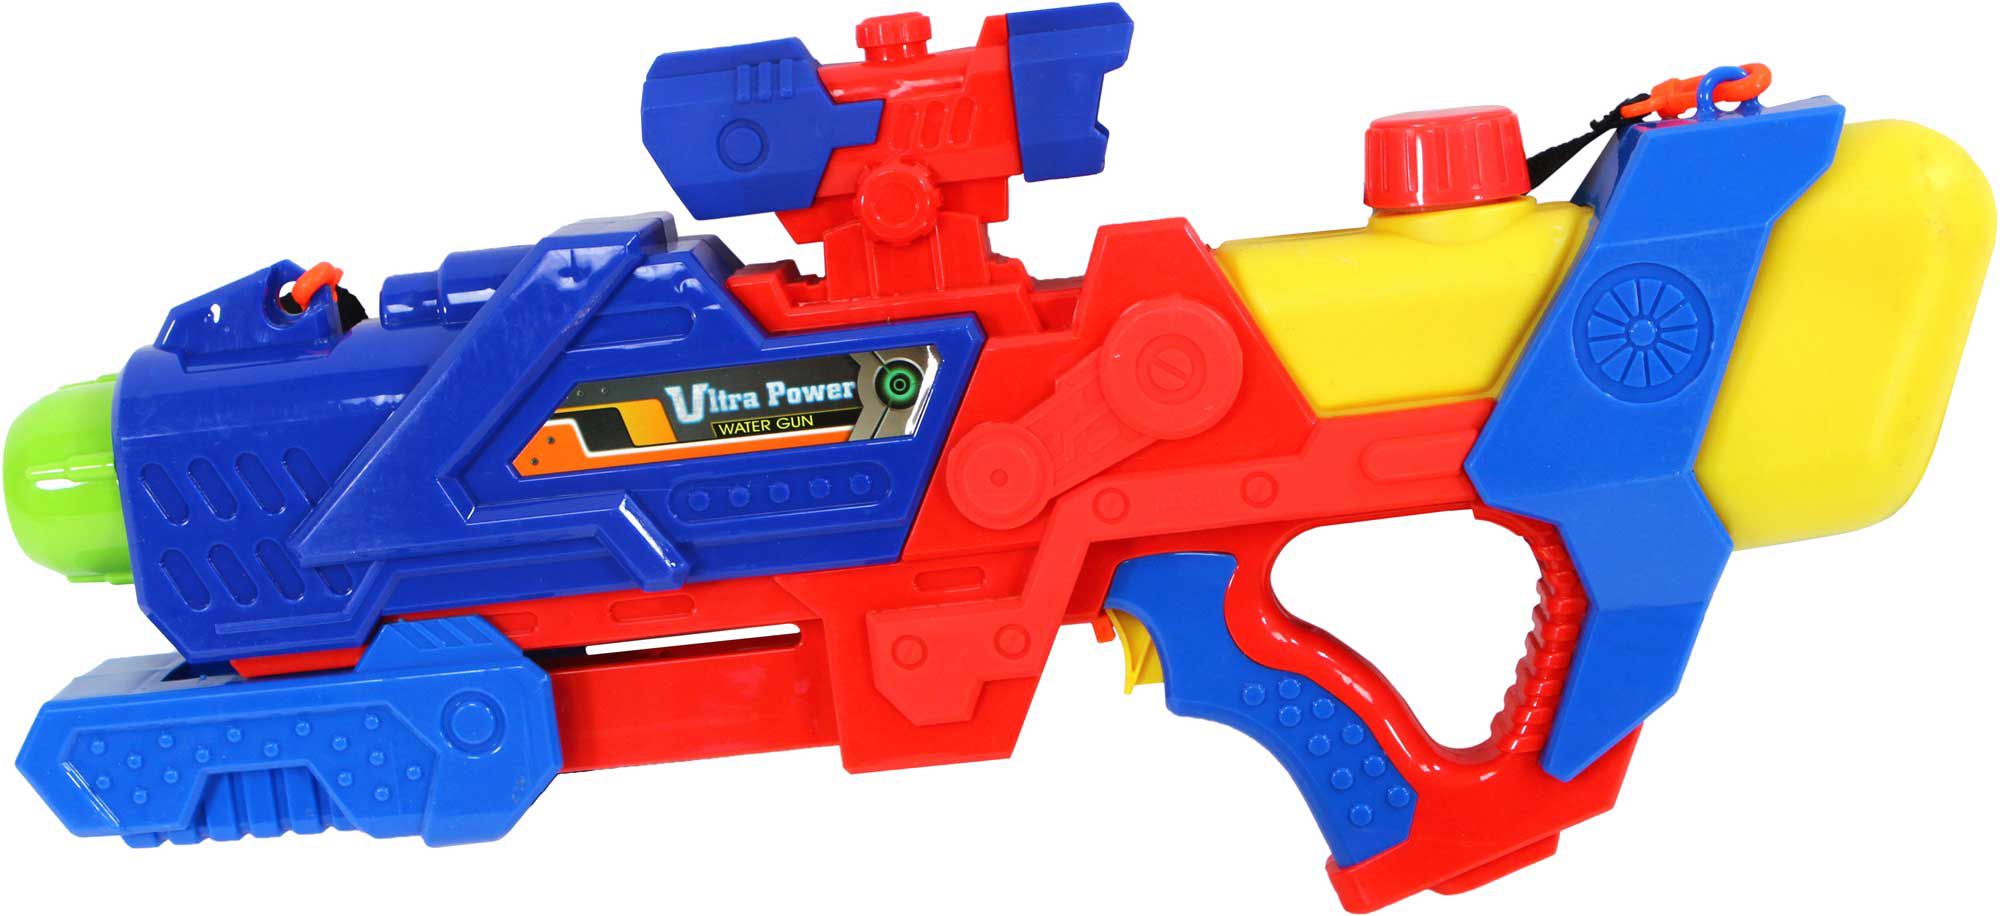 toy gun water